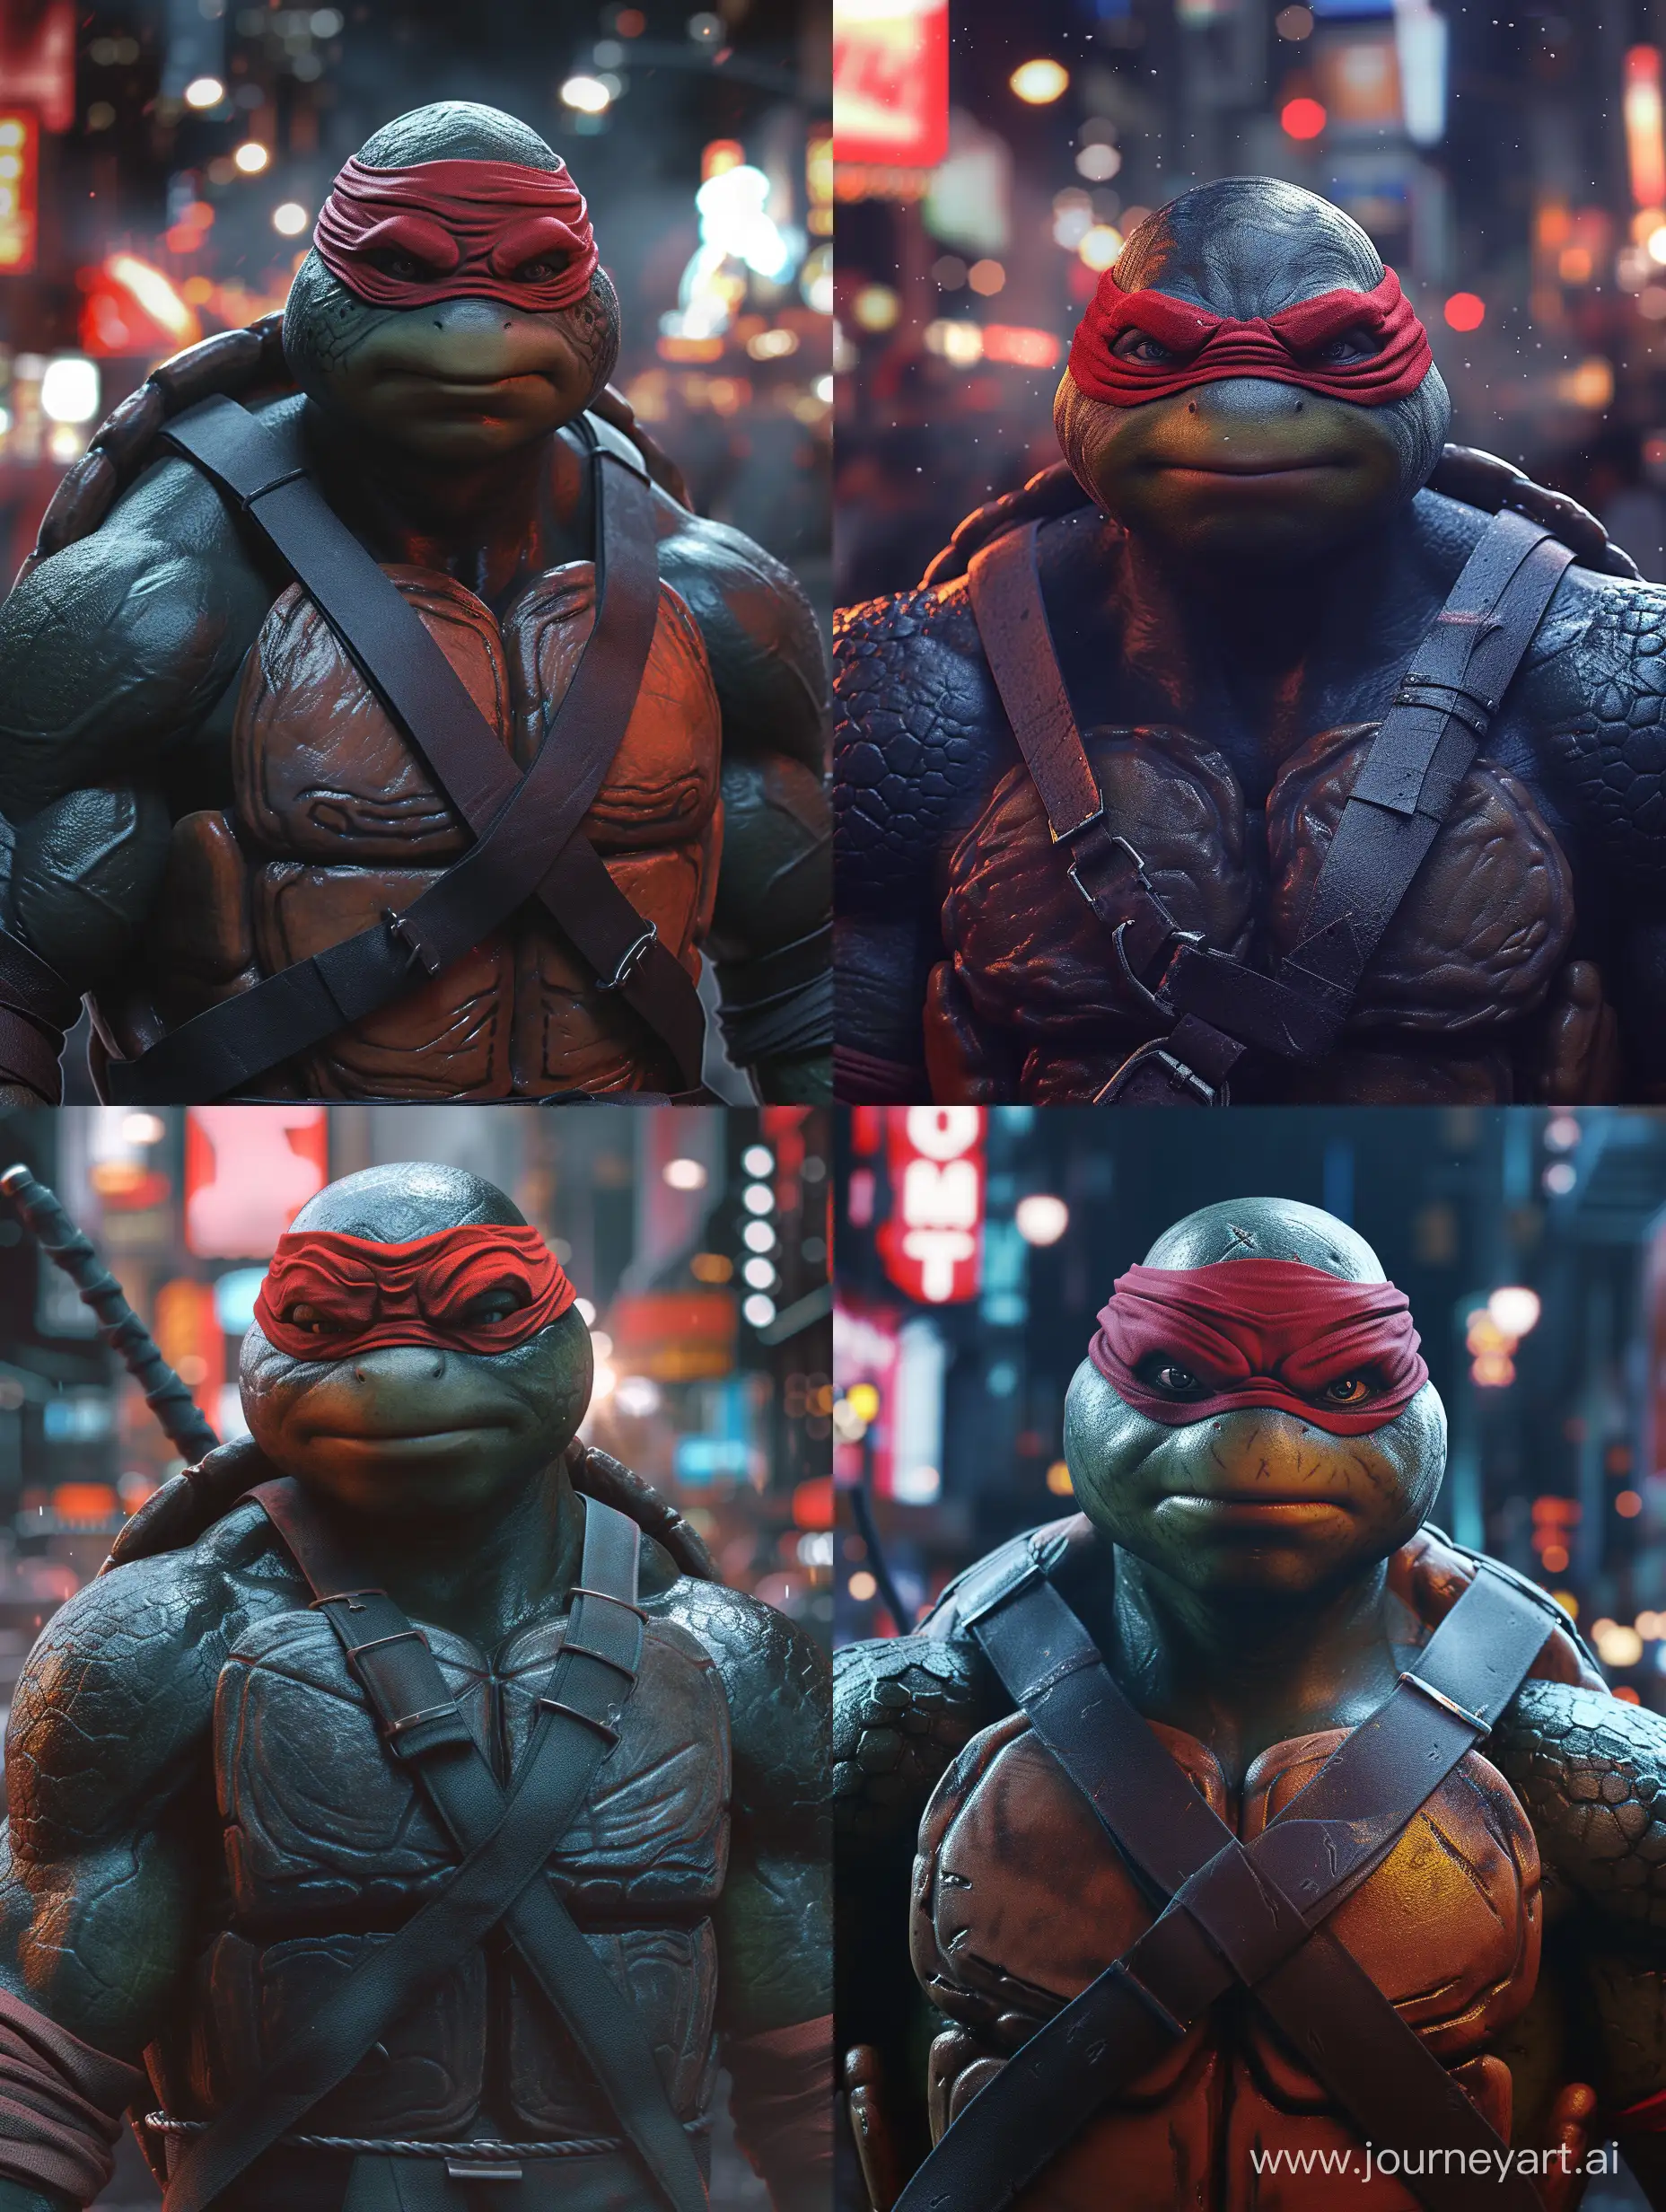 Realistic-Closeup-of-Raphael-from-Teenage-Mutant-Ninja-Turtles-in-Urban-Night-Scene